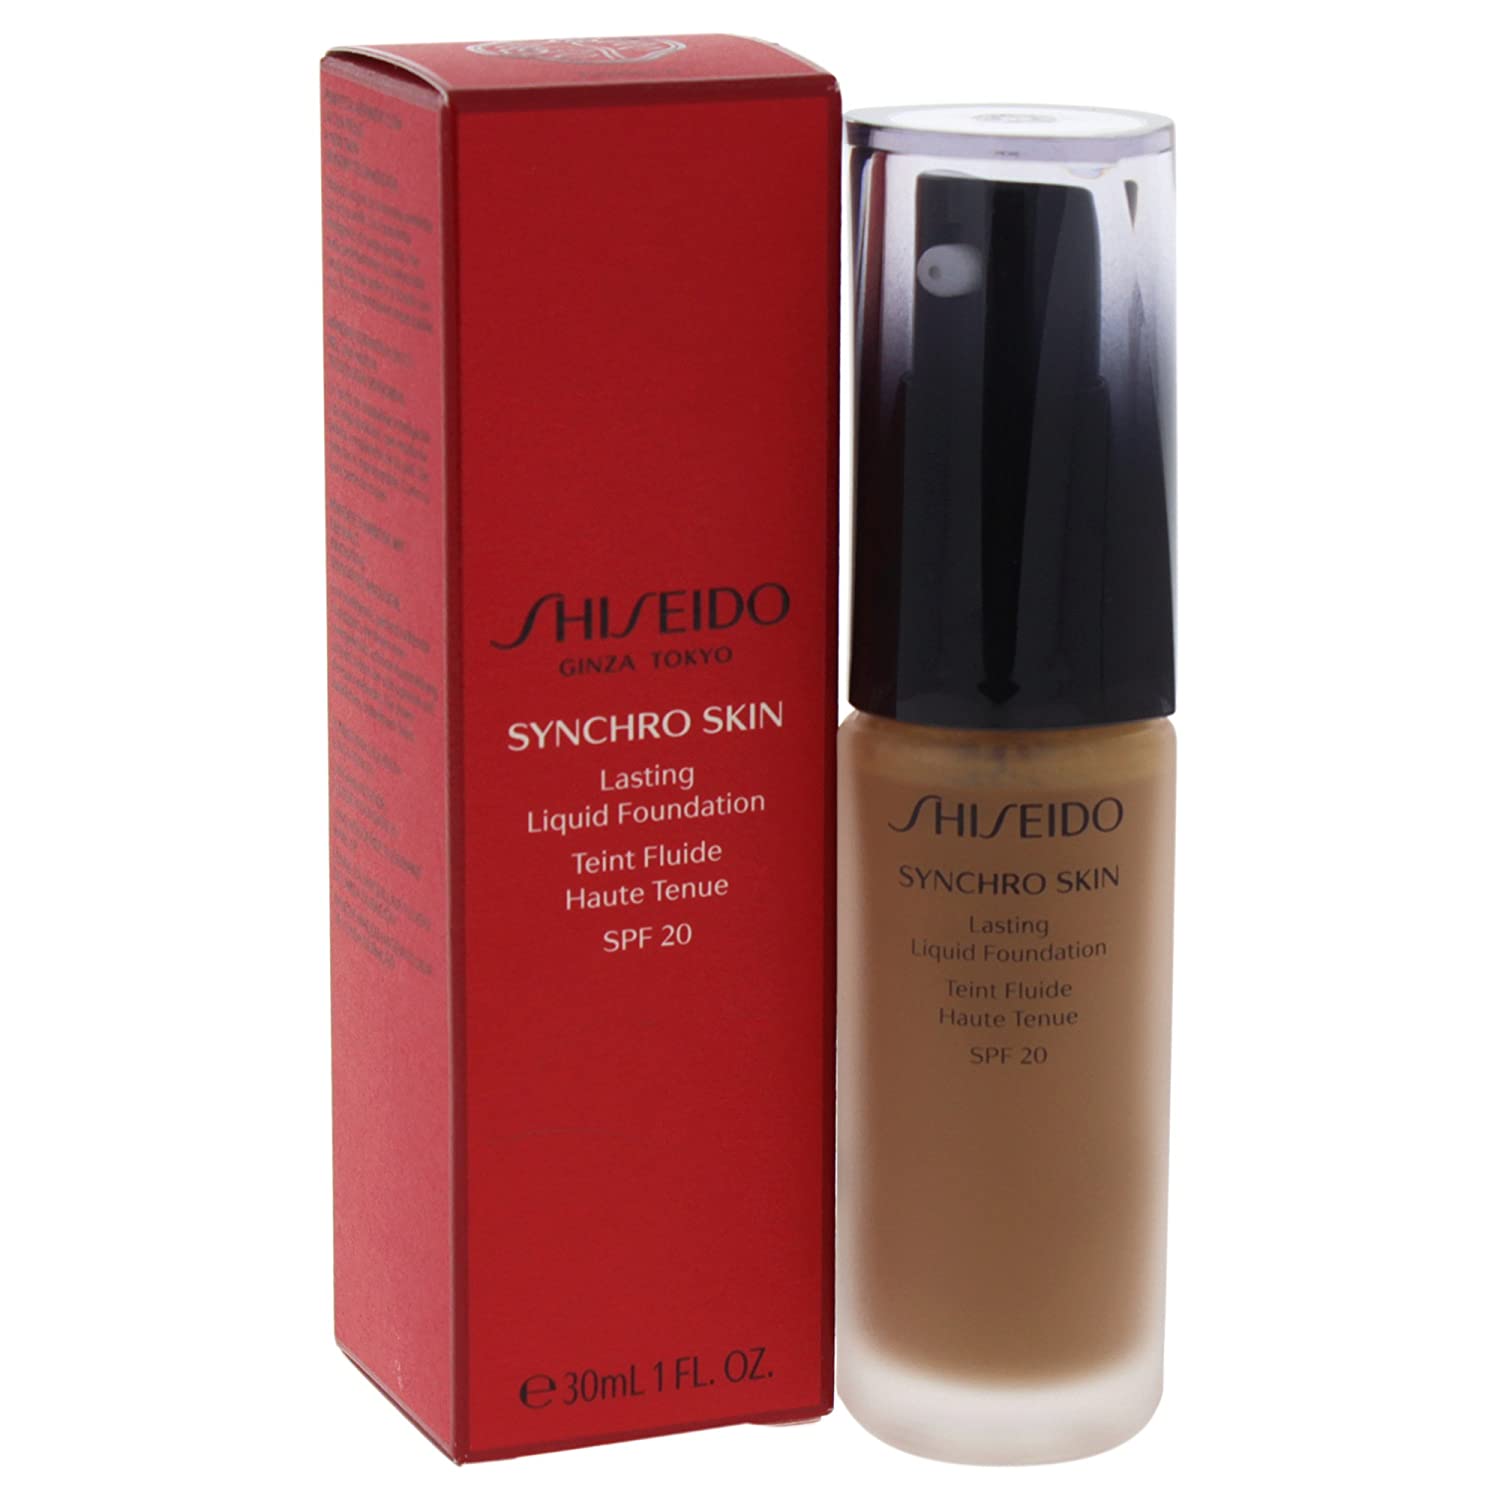 Shiseido Liquid Foundation & Skin Lasting G6 D110 SPF 20 30ml Price 100 ml [German Import] 119.83 EUR, ‎gold